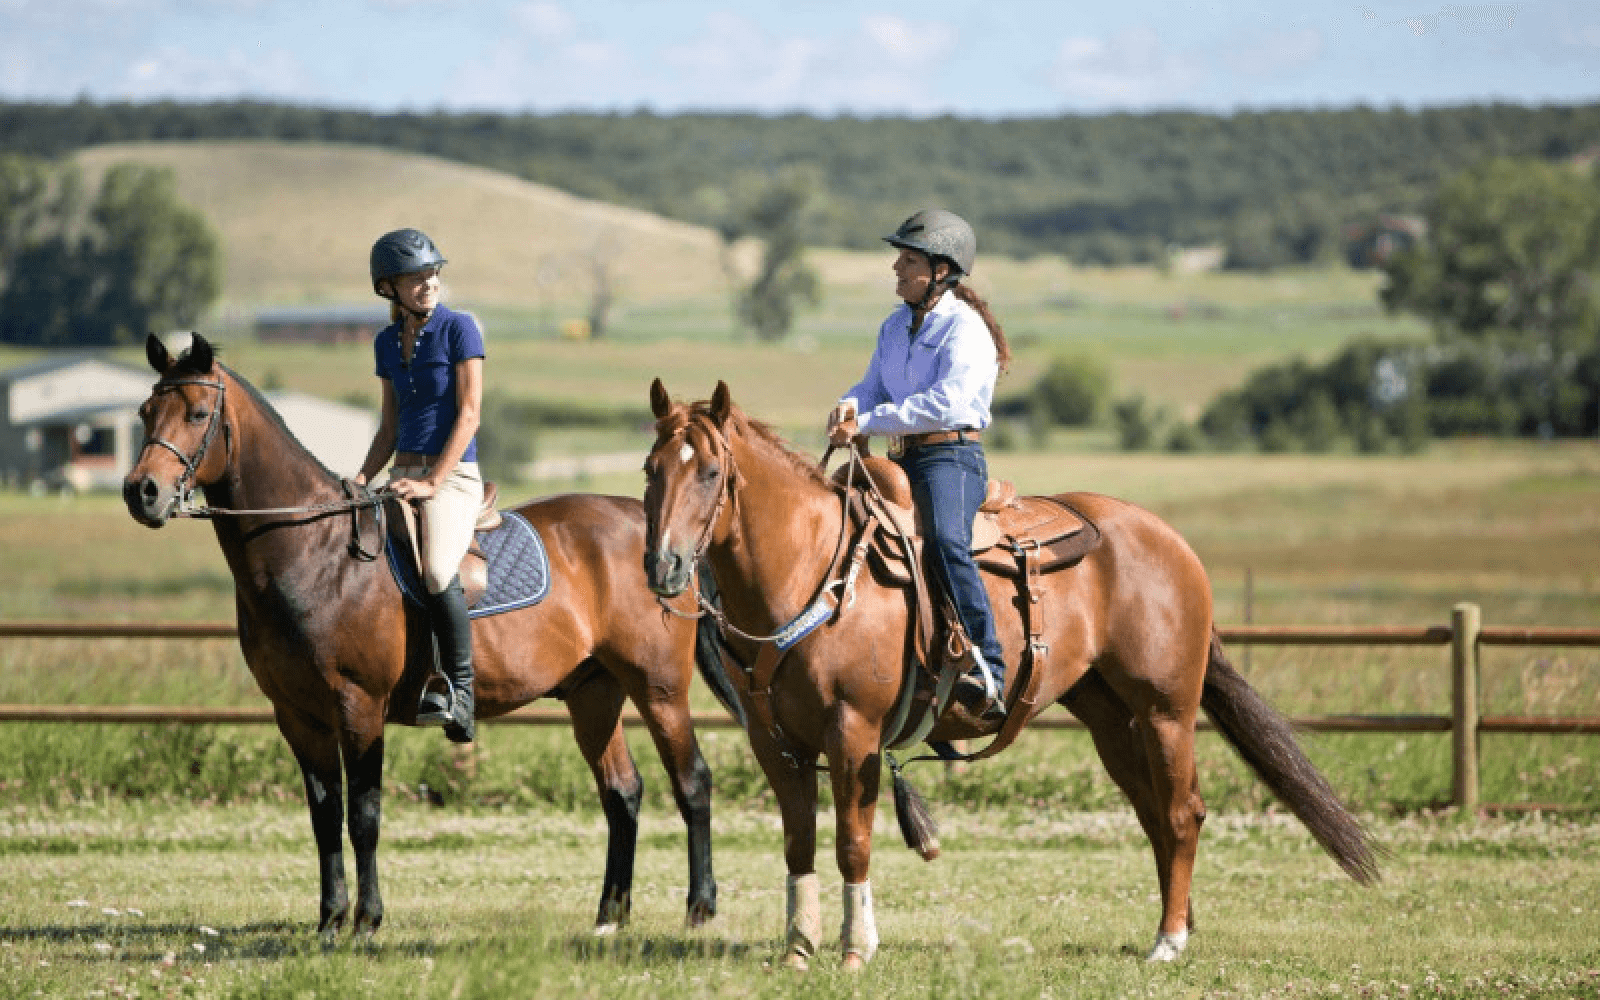 A couple horseback riding at the C U Lazy ranch 